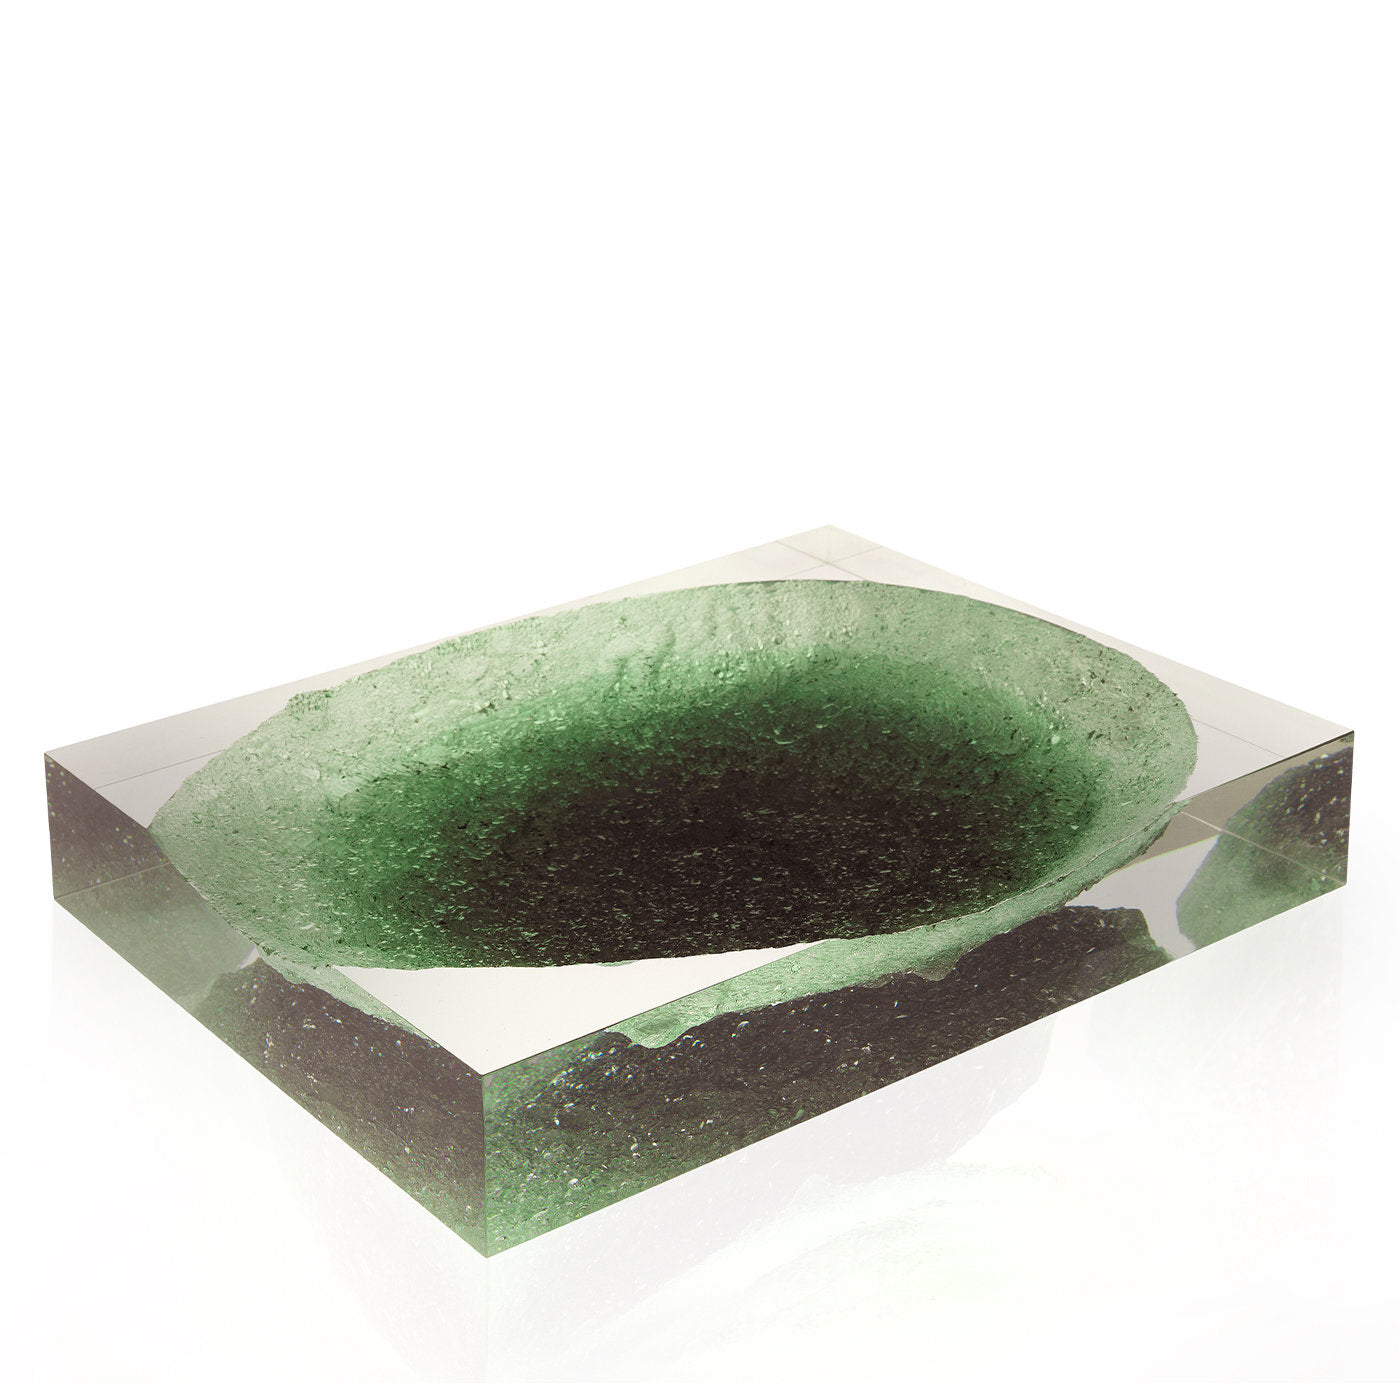 Glacoja Emerald Centerpiece by Analogia Project - Alternative view 2